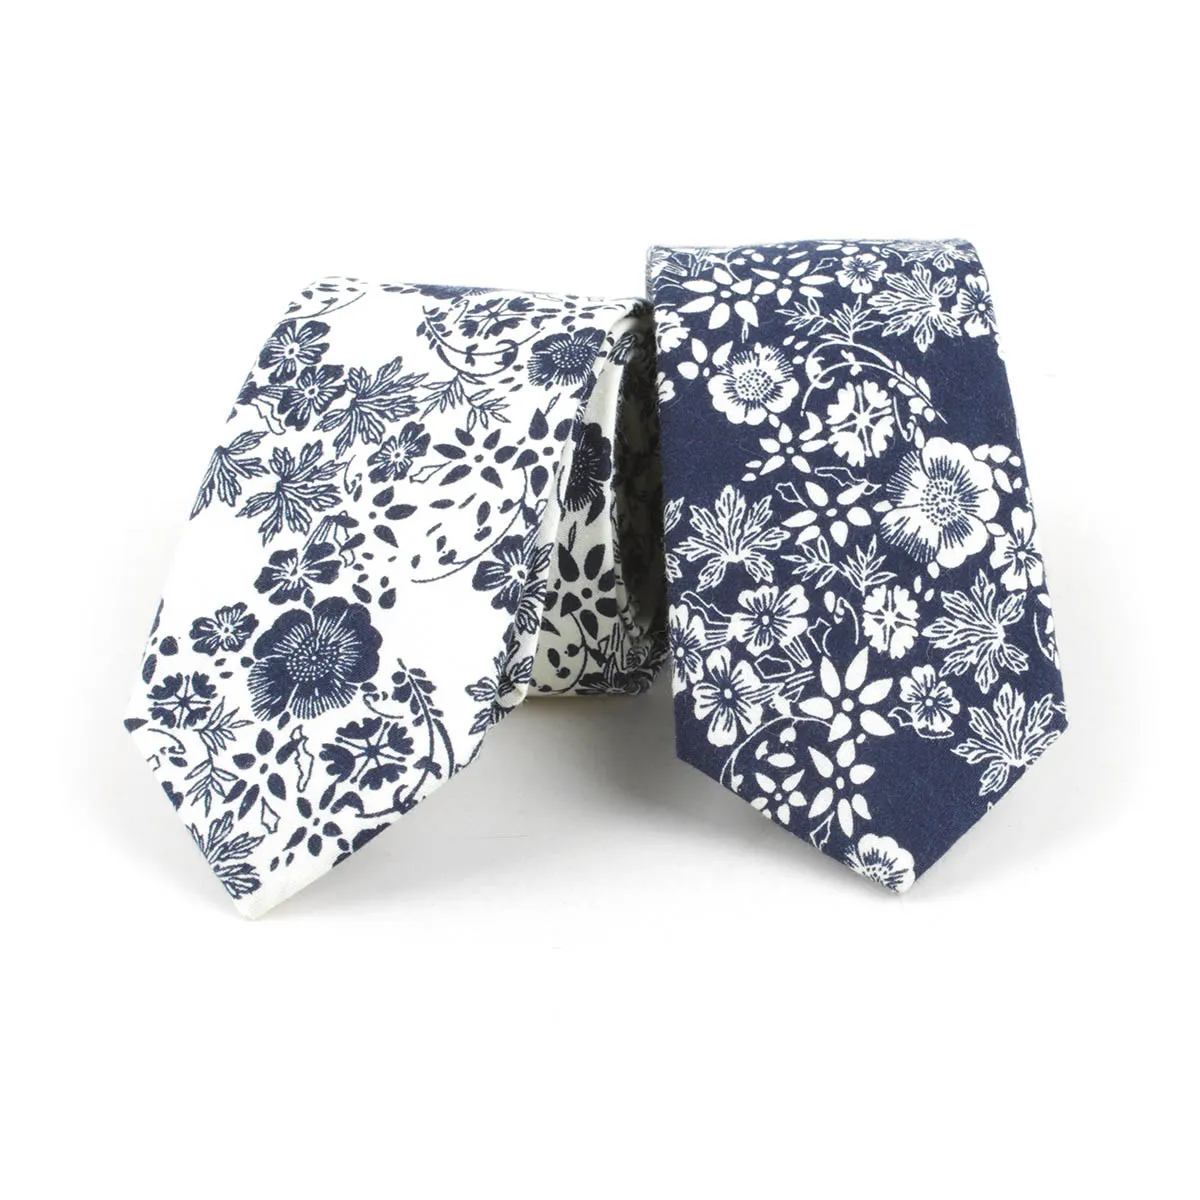 Skinny Ties Men's Cotton Printed Floral Necktie Wedding groomsman Party250m